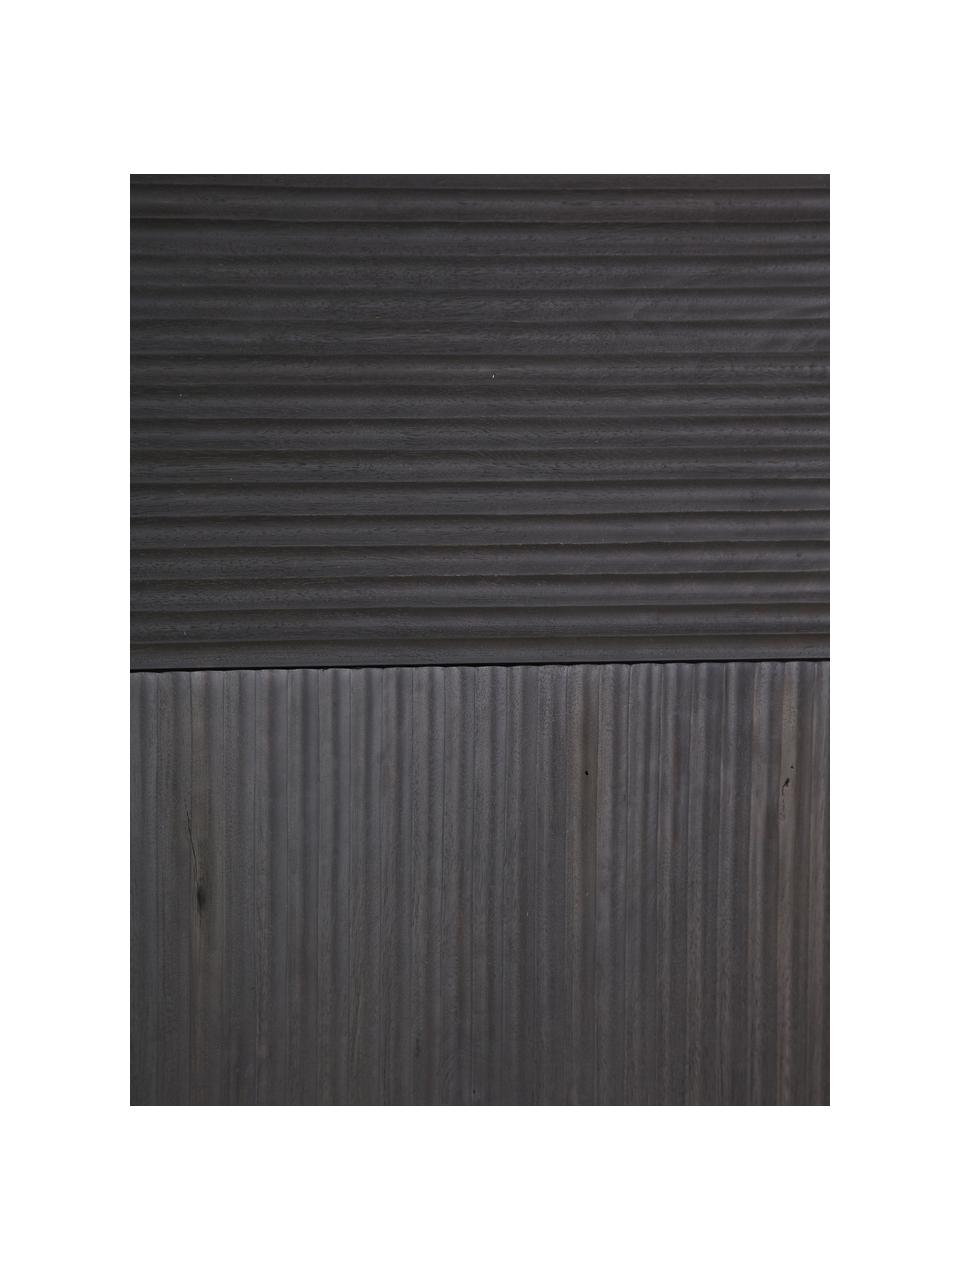 Akazienholz-Highboard Mamba mit geriffelter Front, Korpus: Akazienholz, lackiert, Beine: Metall, lackiert, Schwarz, 115 x 140 cm